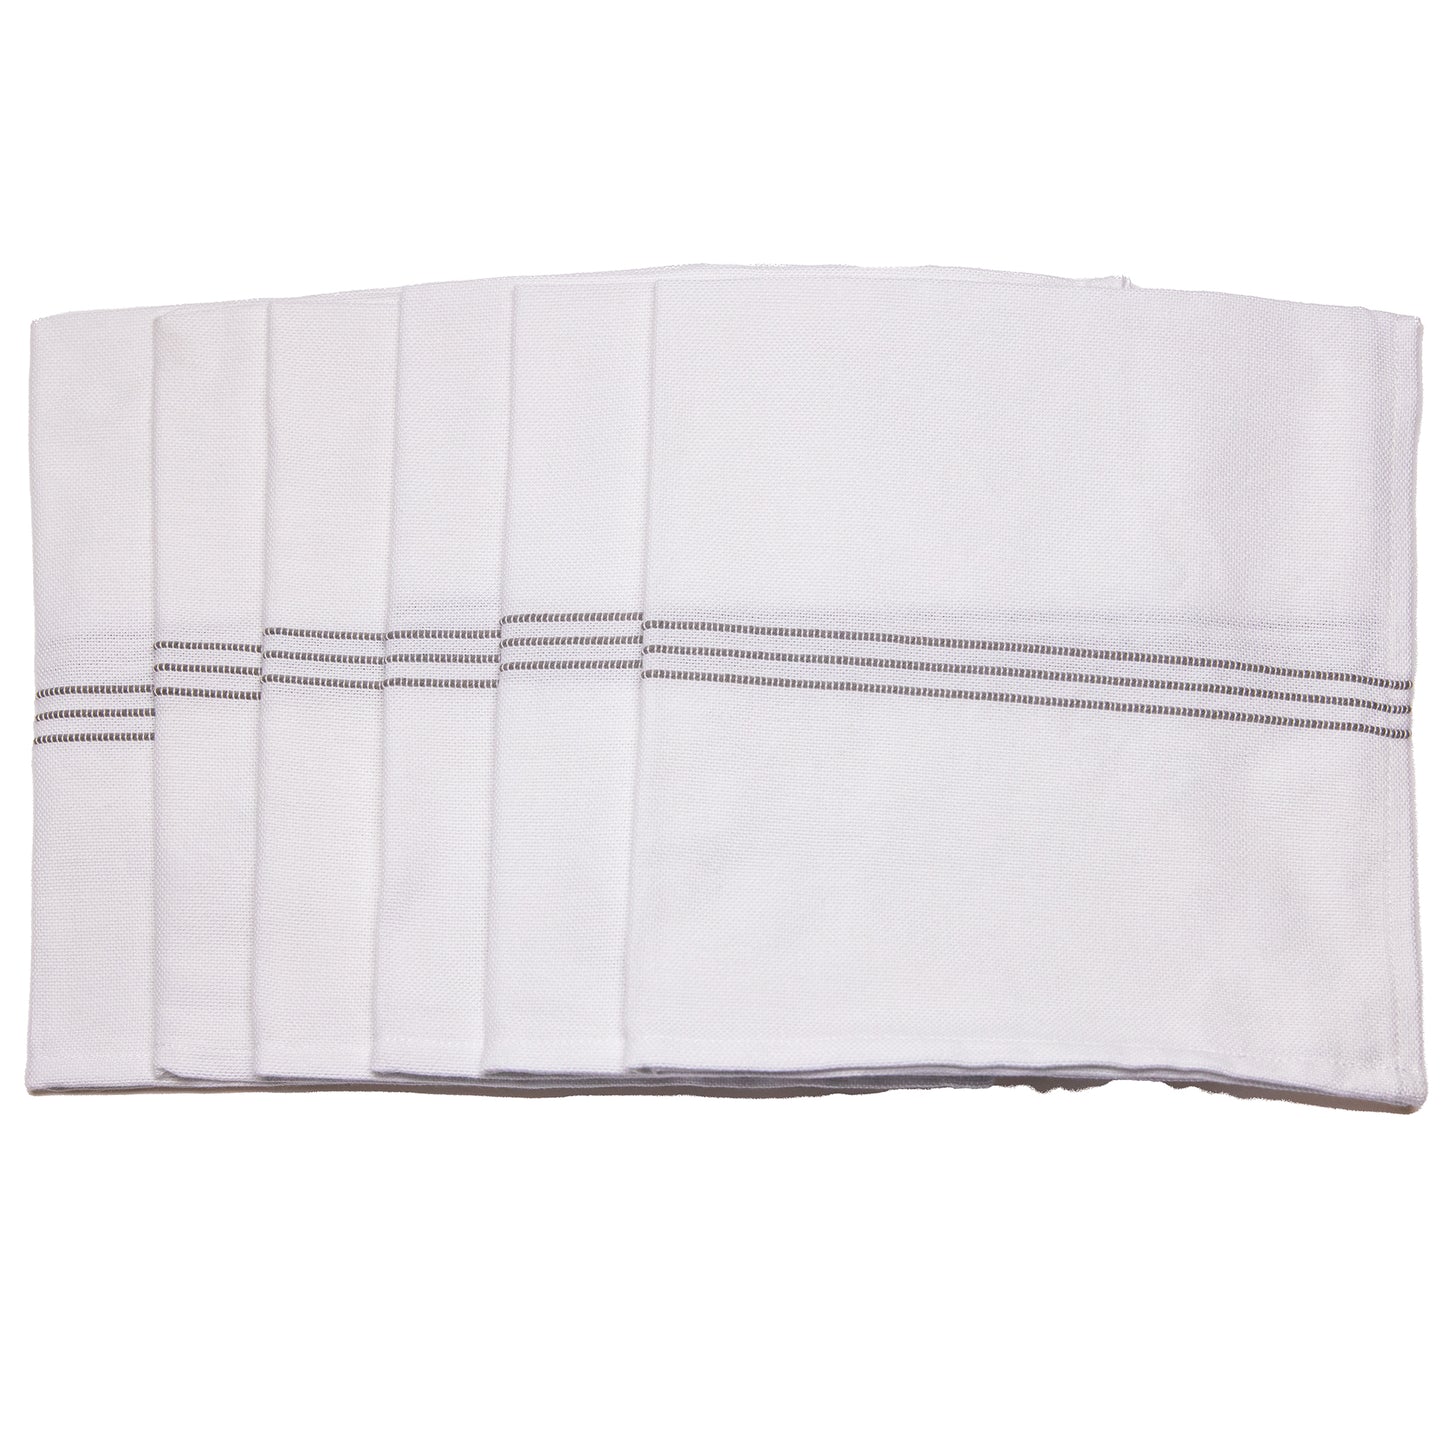 grey artisan woven cotton sustainably crafted kitchen napkin hostess set